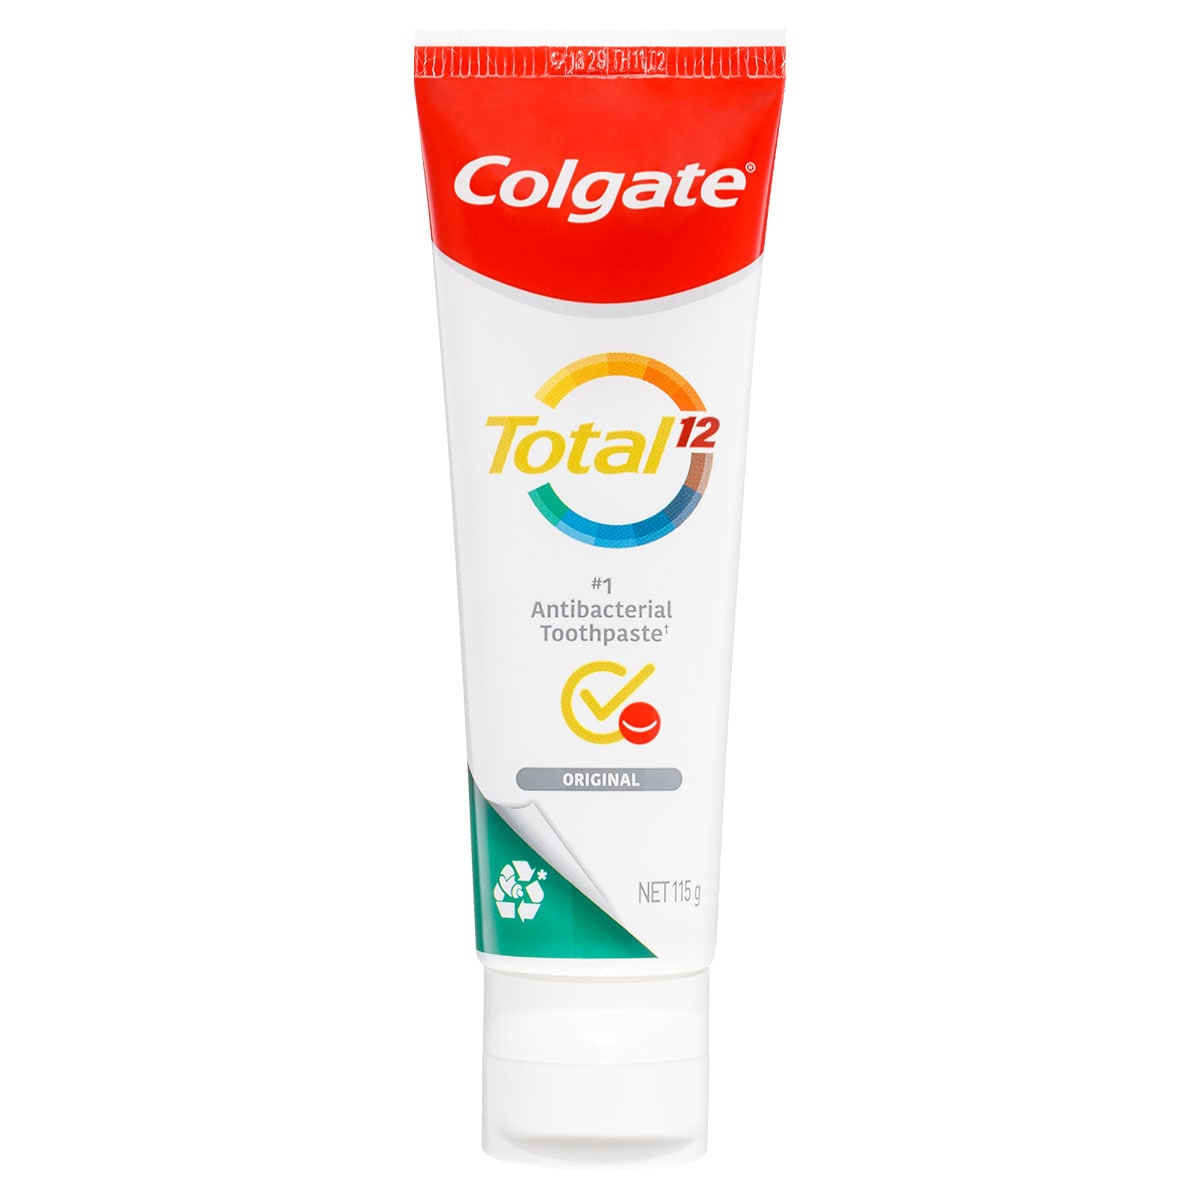 Colgate Total Original Antbacterial Toothpaste 115g